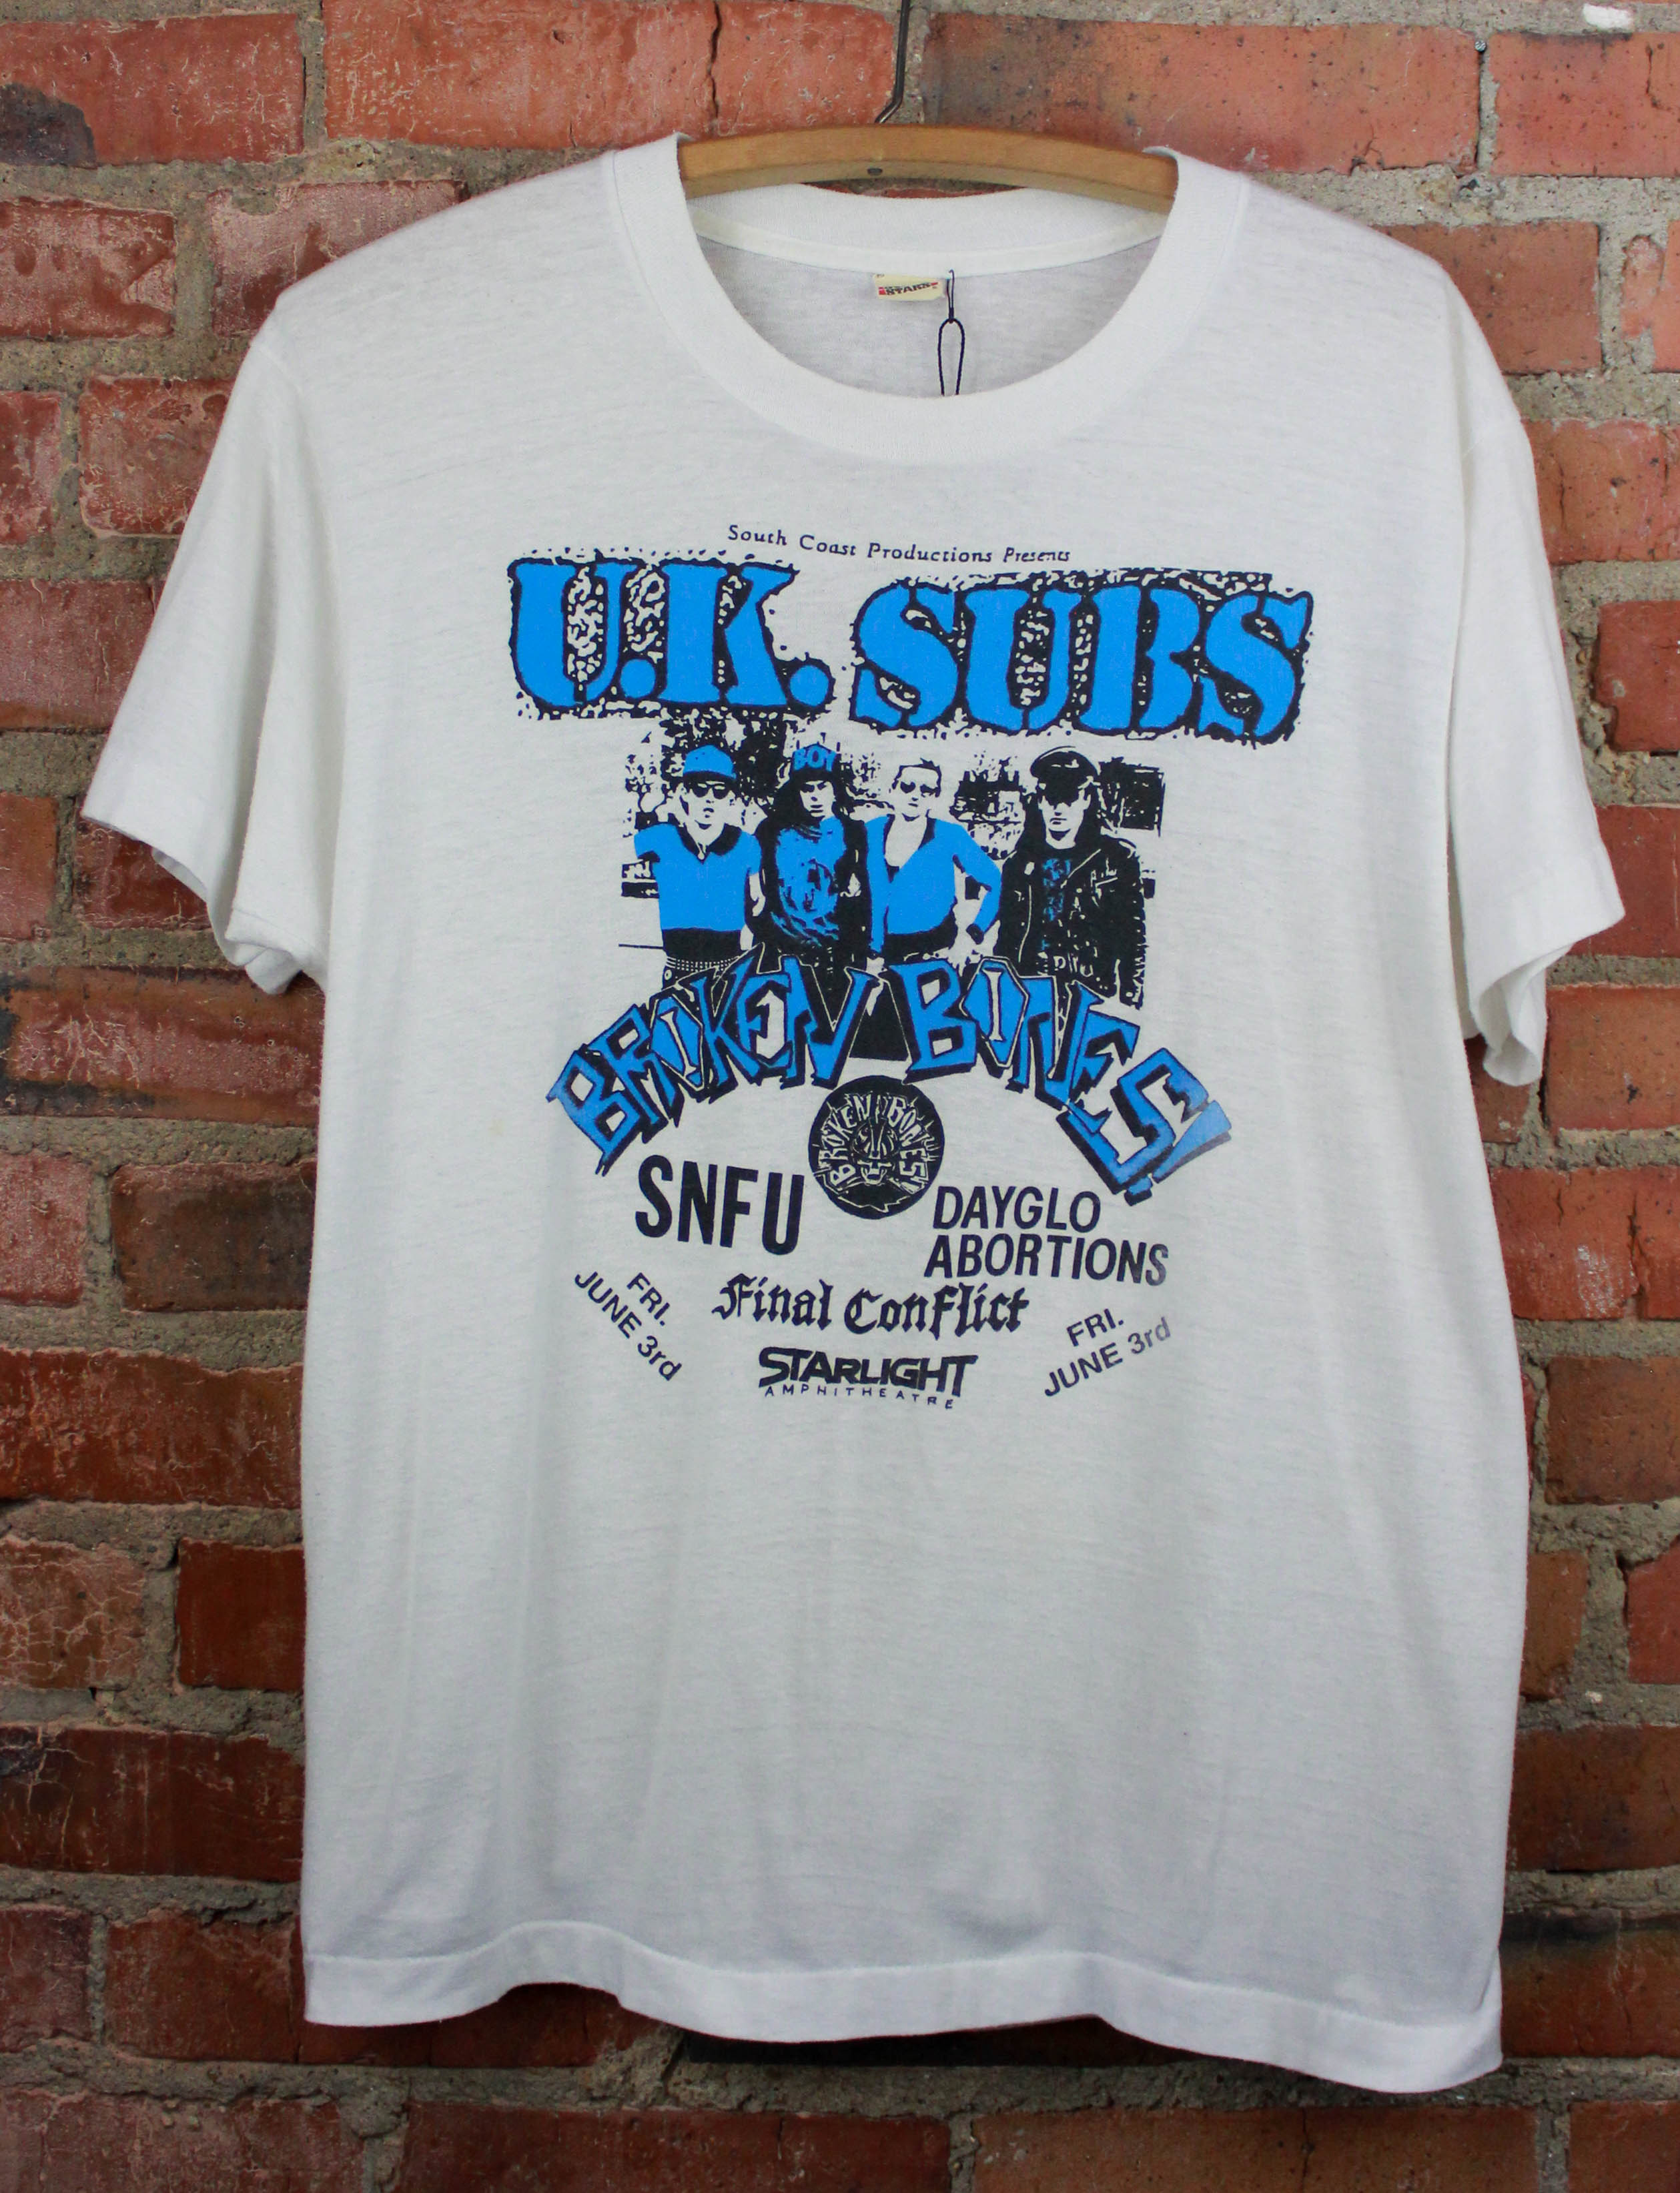 Vintage 80's UK Subs Concert T Shirt Broken Bones Punk Rock Event White  Unisex Medium